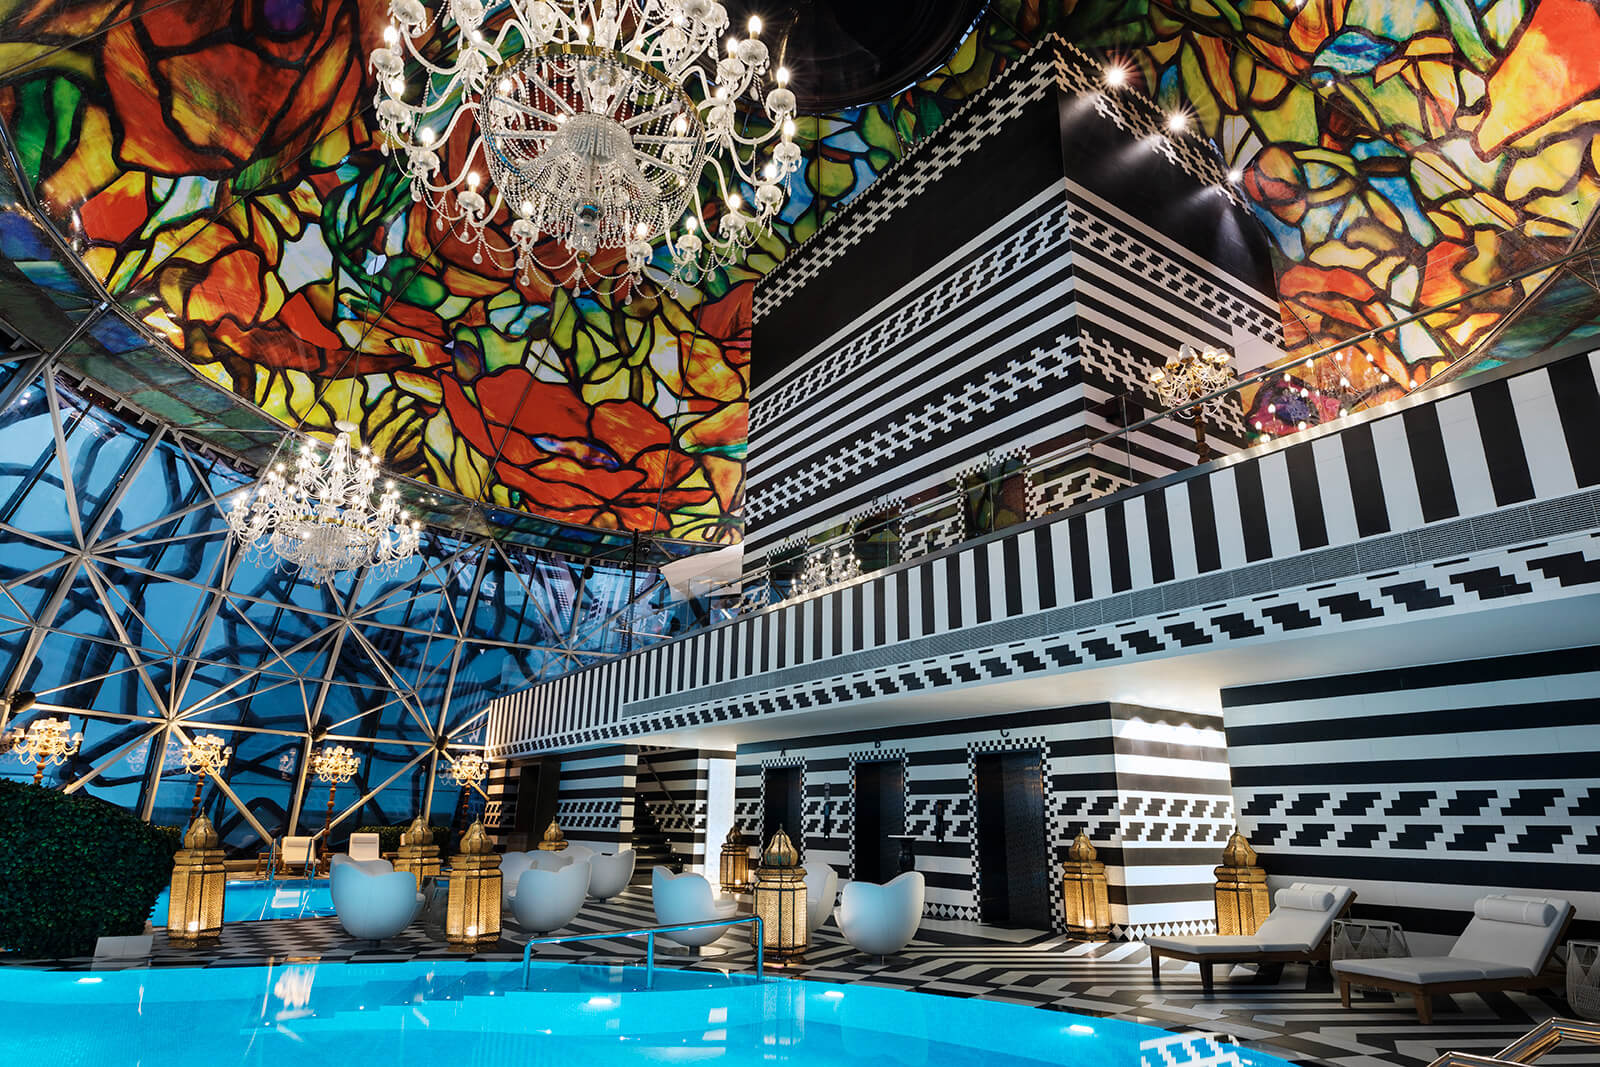 Mondrian Doha tells stories of old legends” through local design